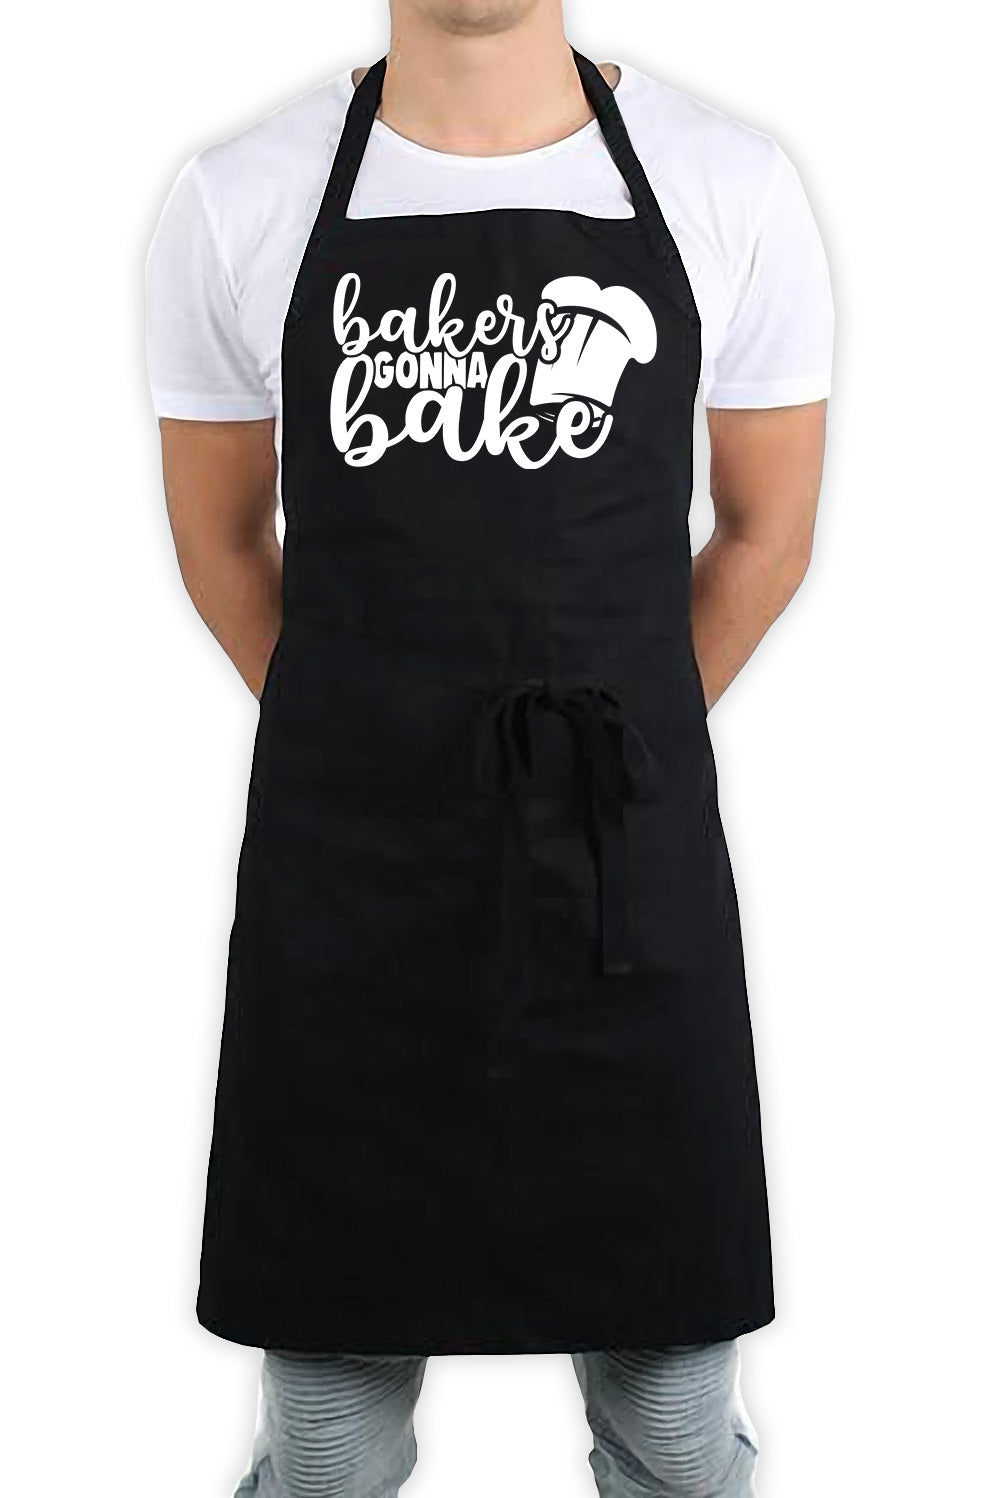 Bakers Gonna Bake Funny Kitchen BBQ Apron Black